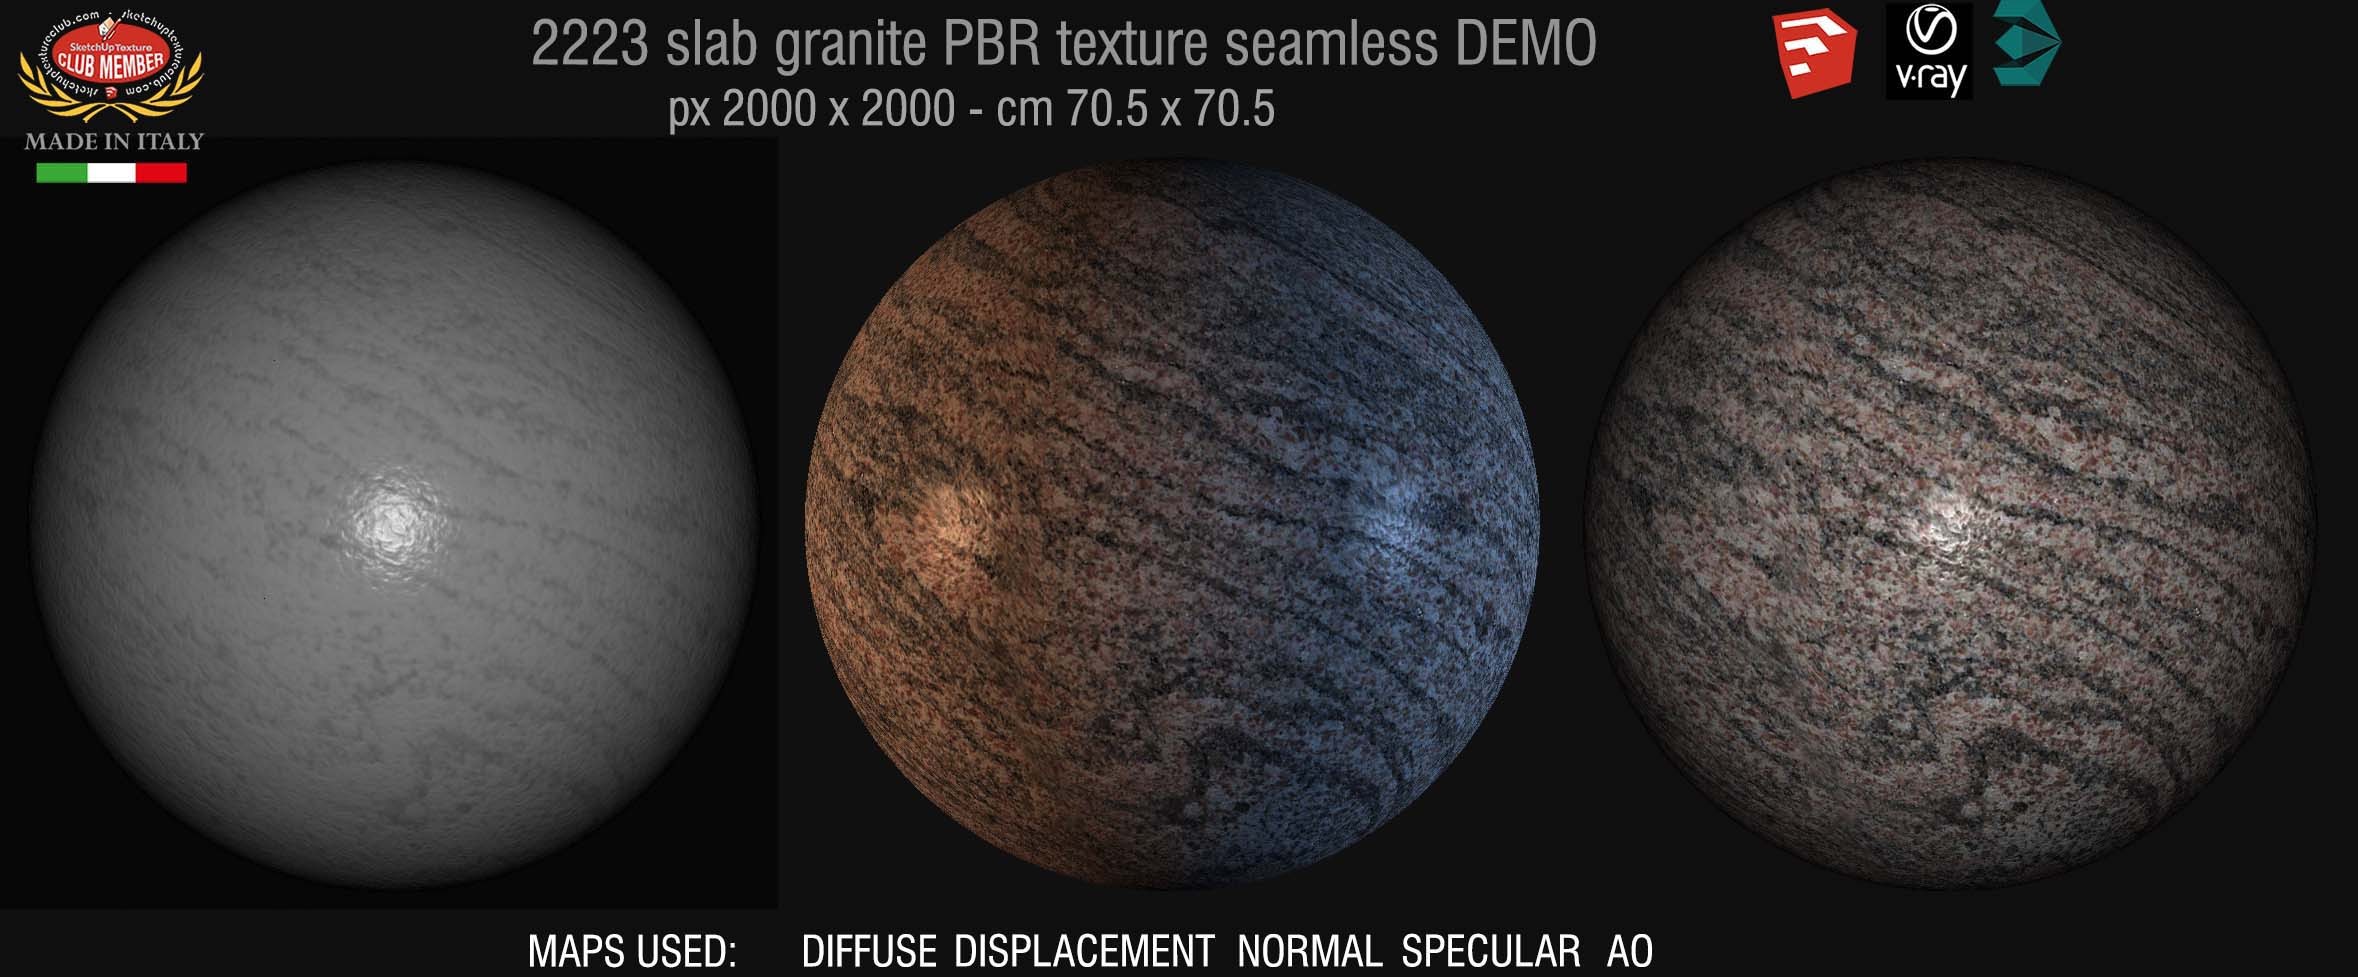 02223 slab granite marble PBR texture seamless DEMO